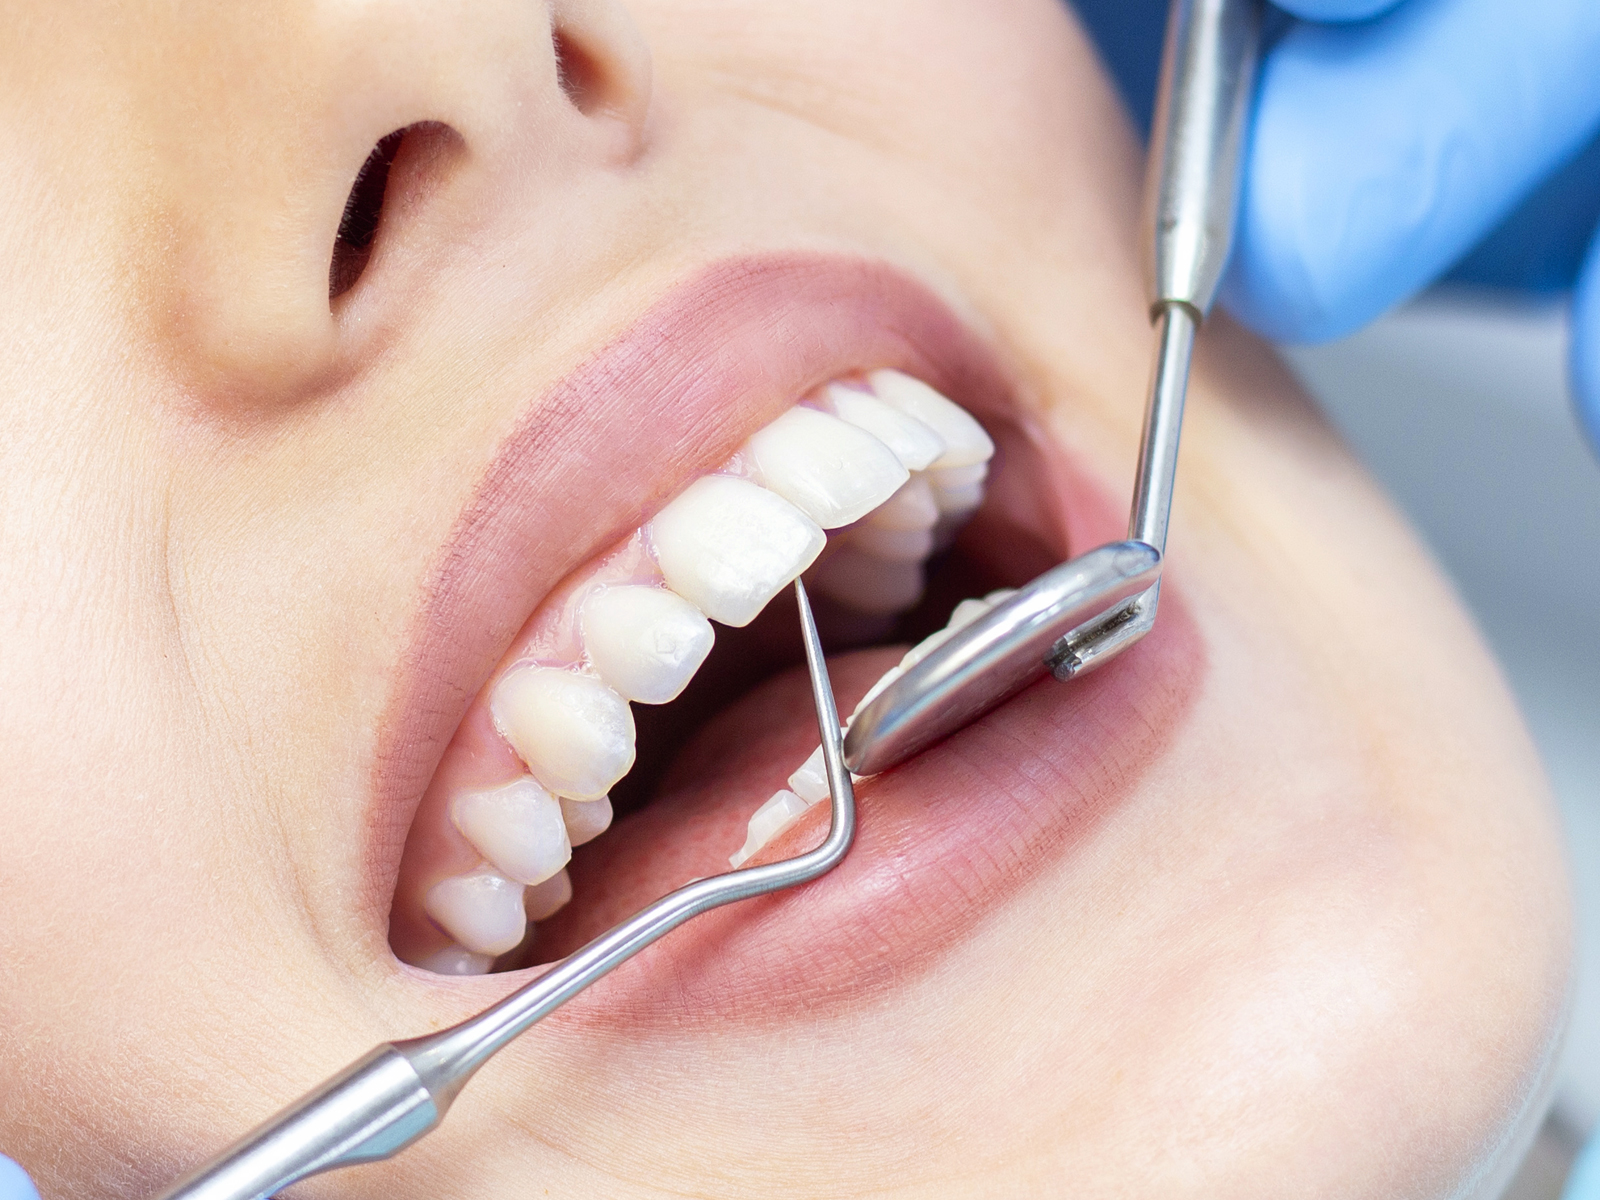 Do regular dental cleaning improve dental health?